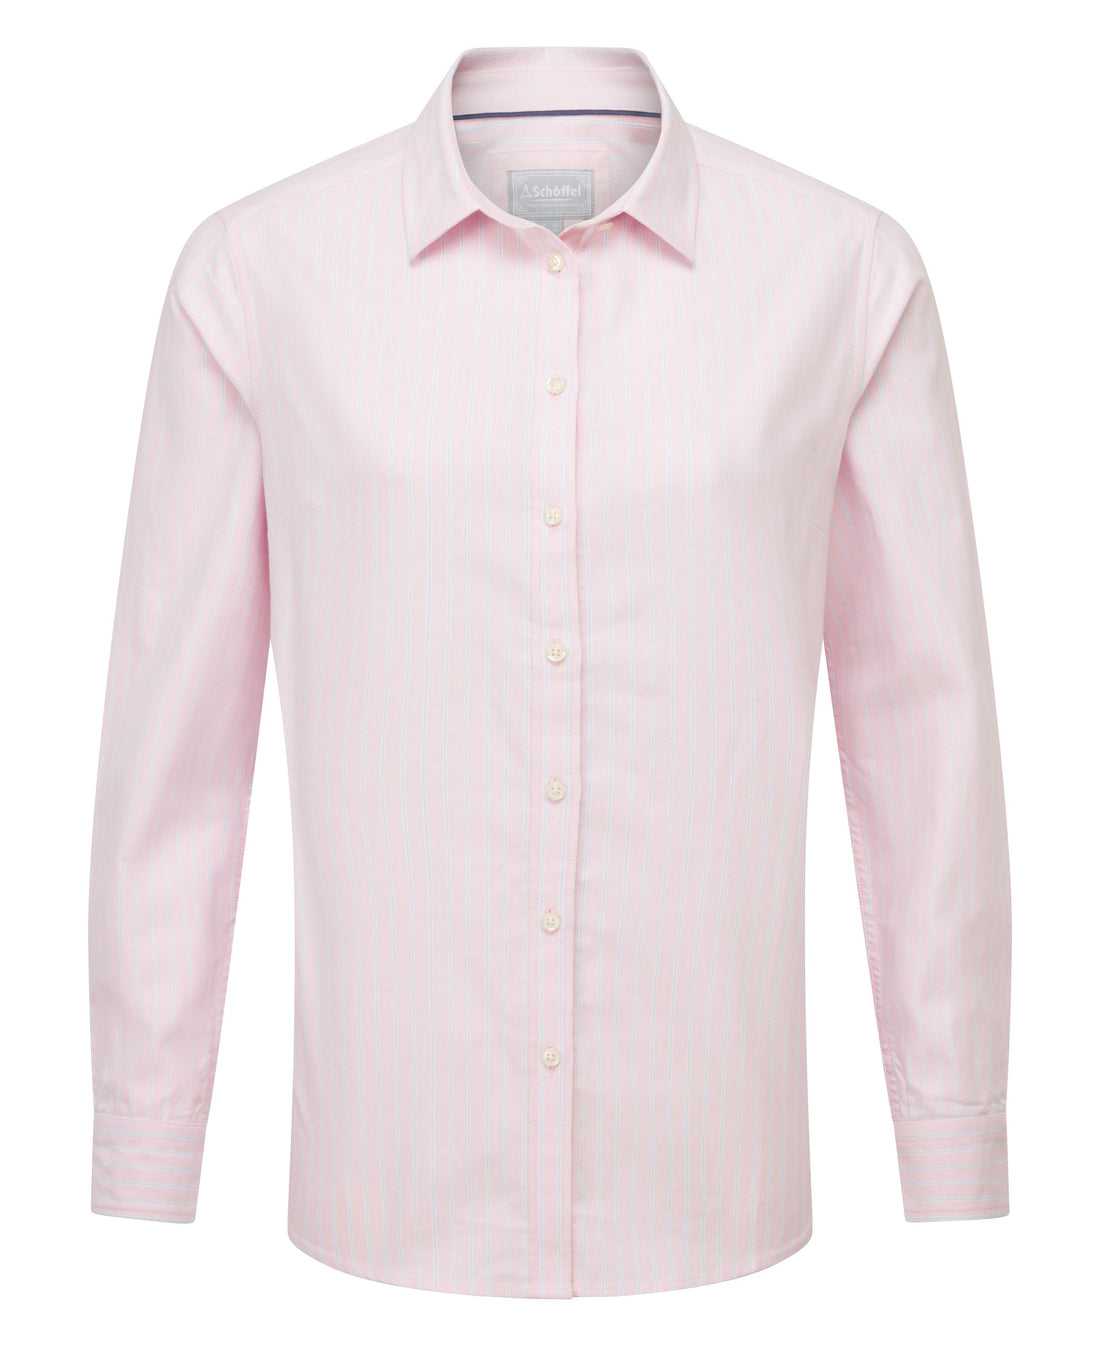 Cley Soft Oxford Shirt - Pink/Blue Stripe